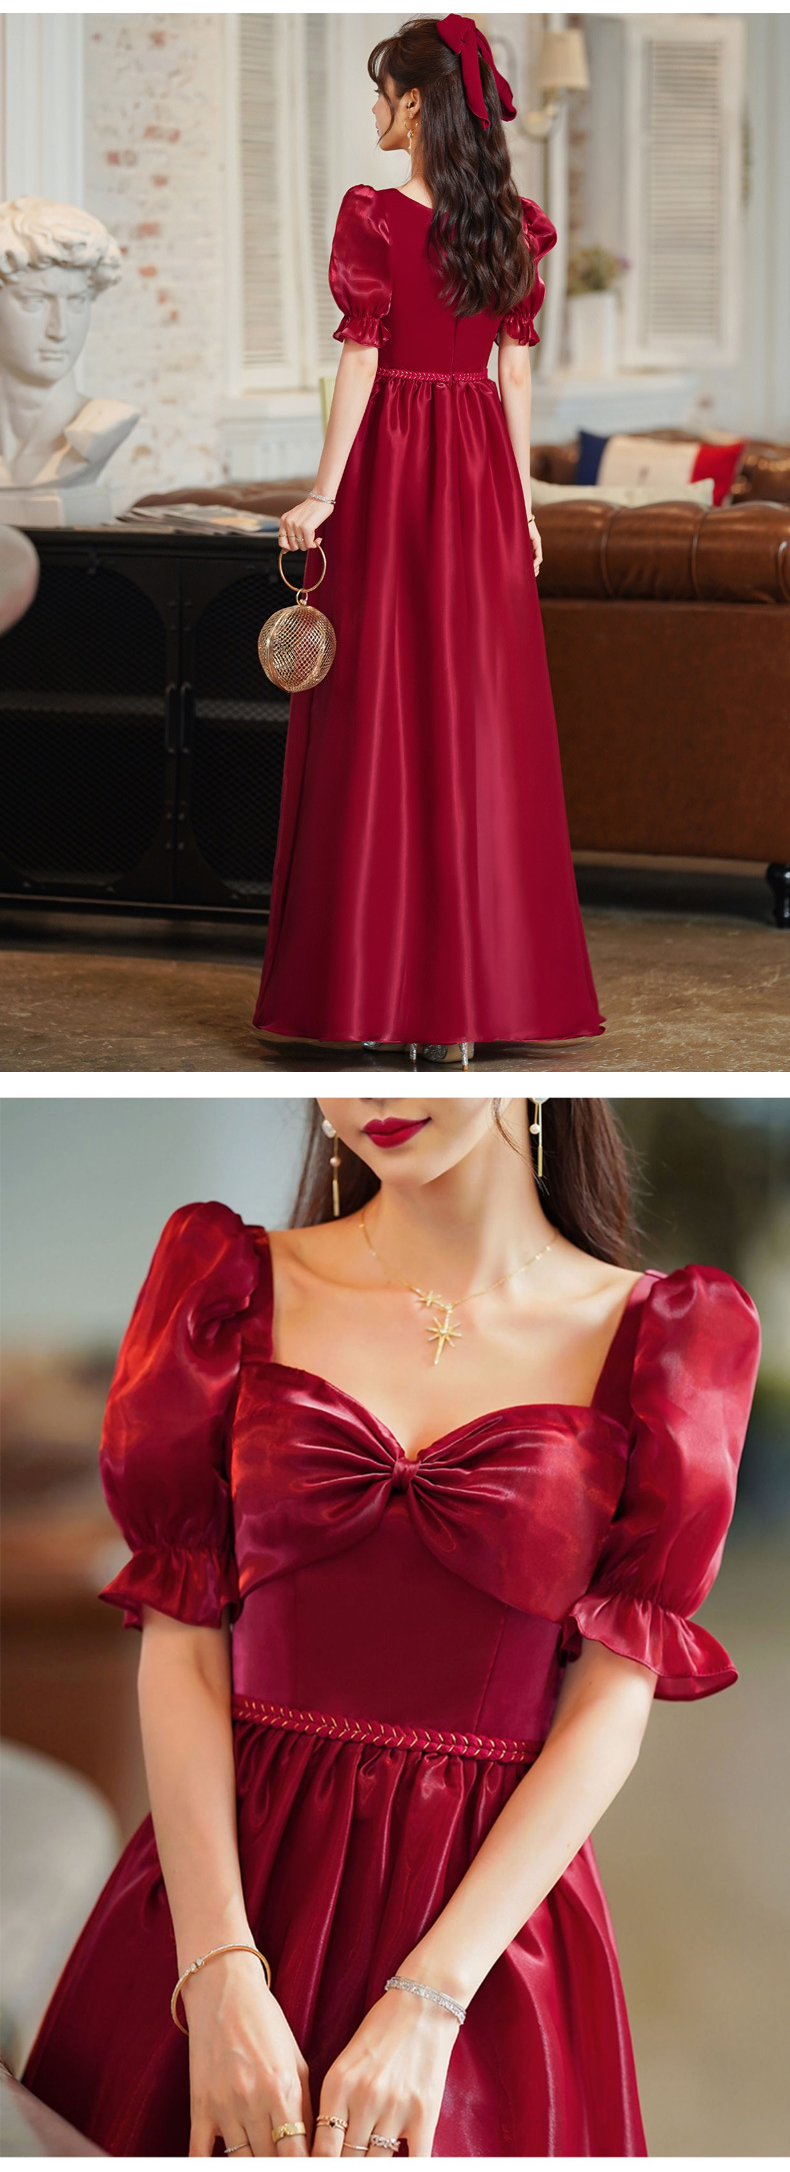 Simple Elegant Red Satin Long Evening Wedding Dress Plus Size15